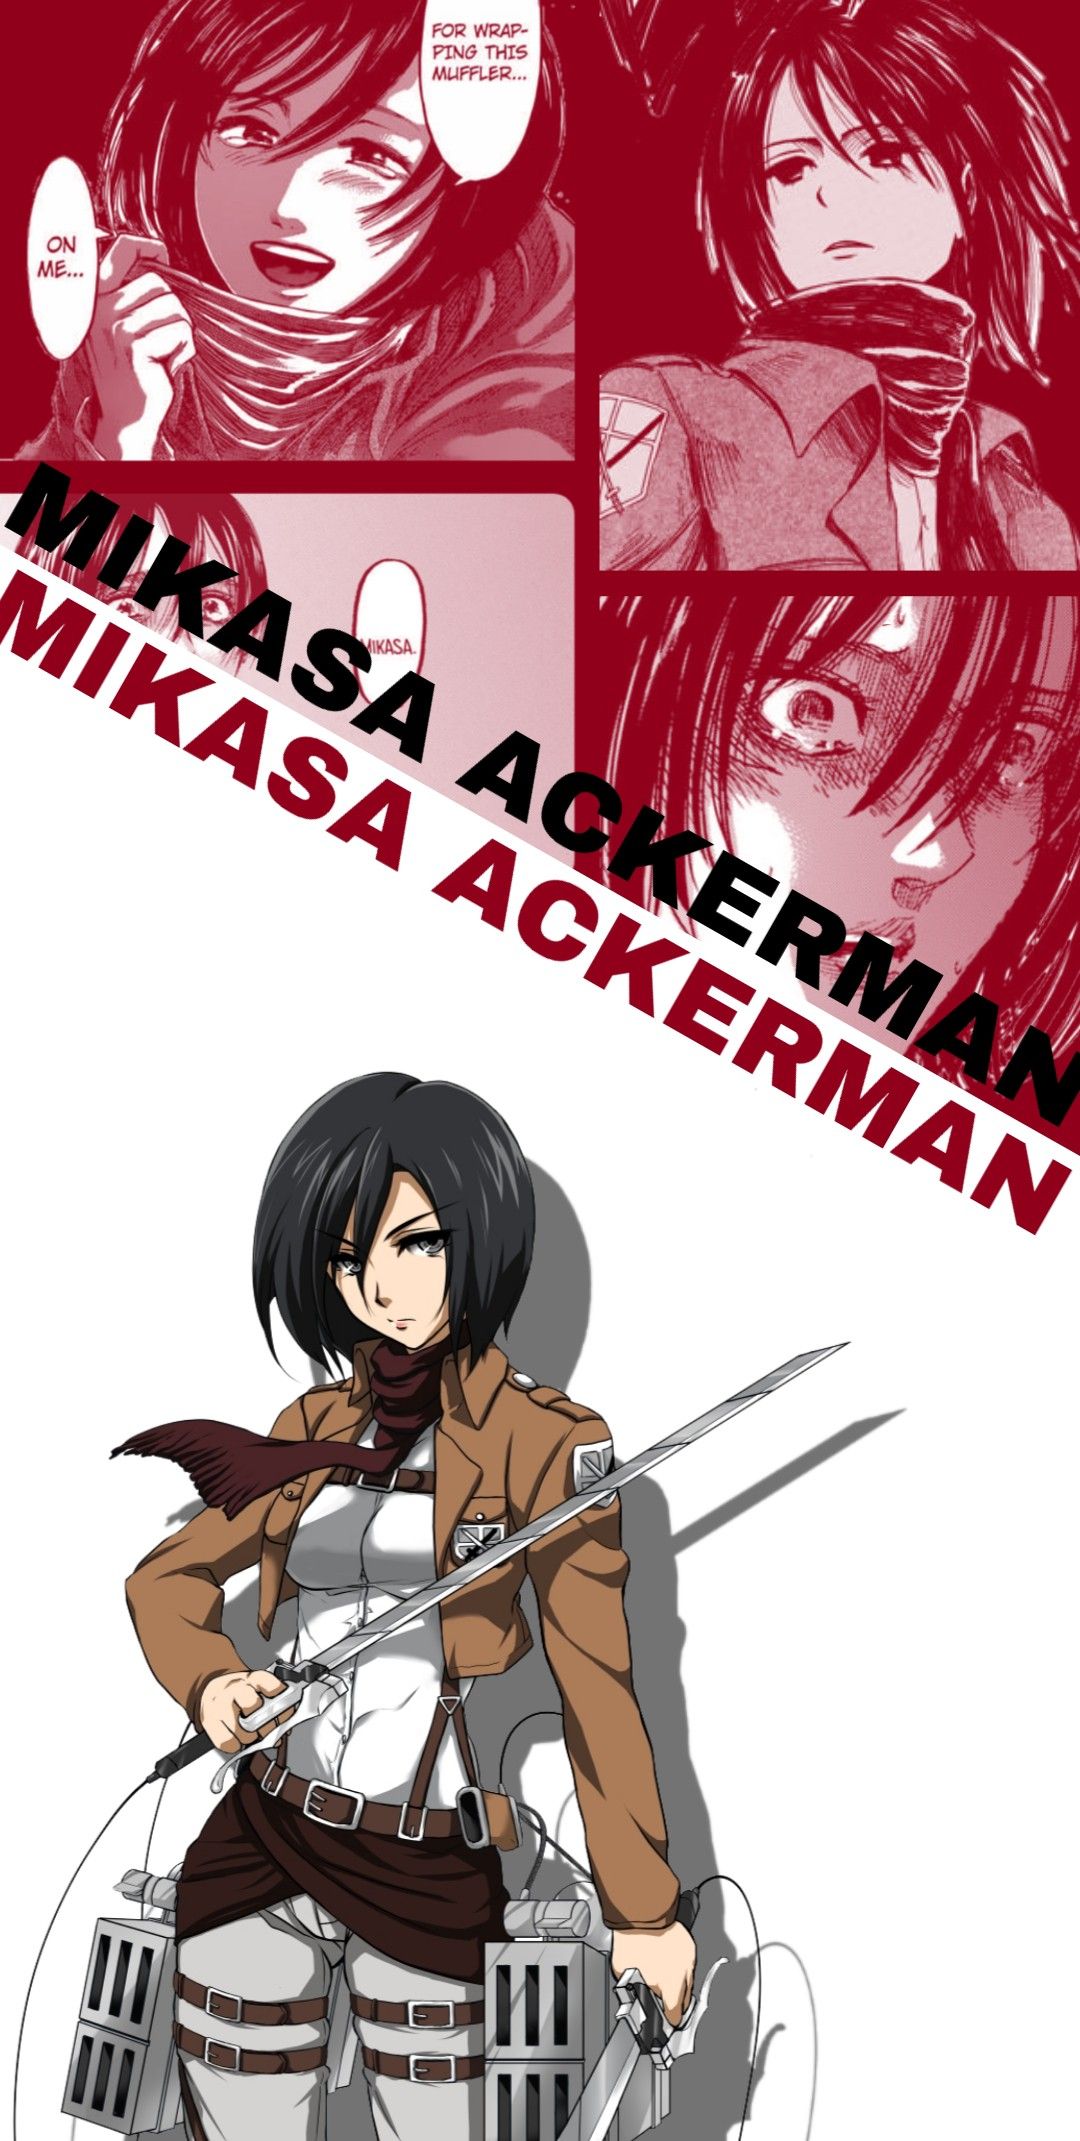 Mikasa Ackerman Wallpaper. Mikasa, Attack on titan anime, Future wallpaper